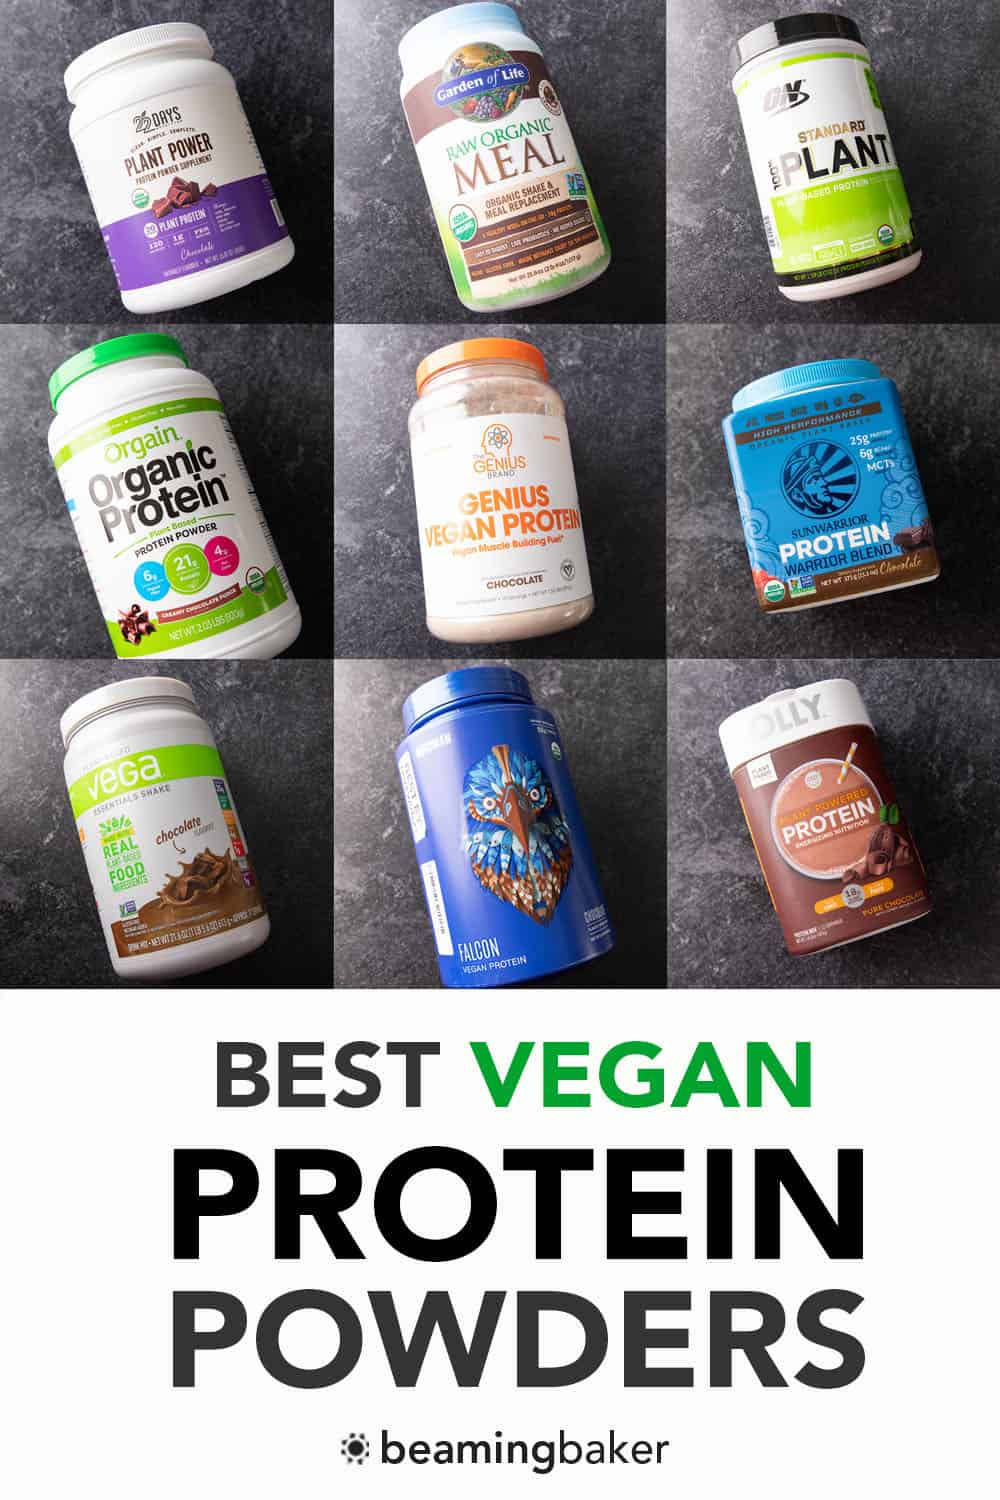 Best Vegan Protein Powder Review pin image